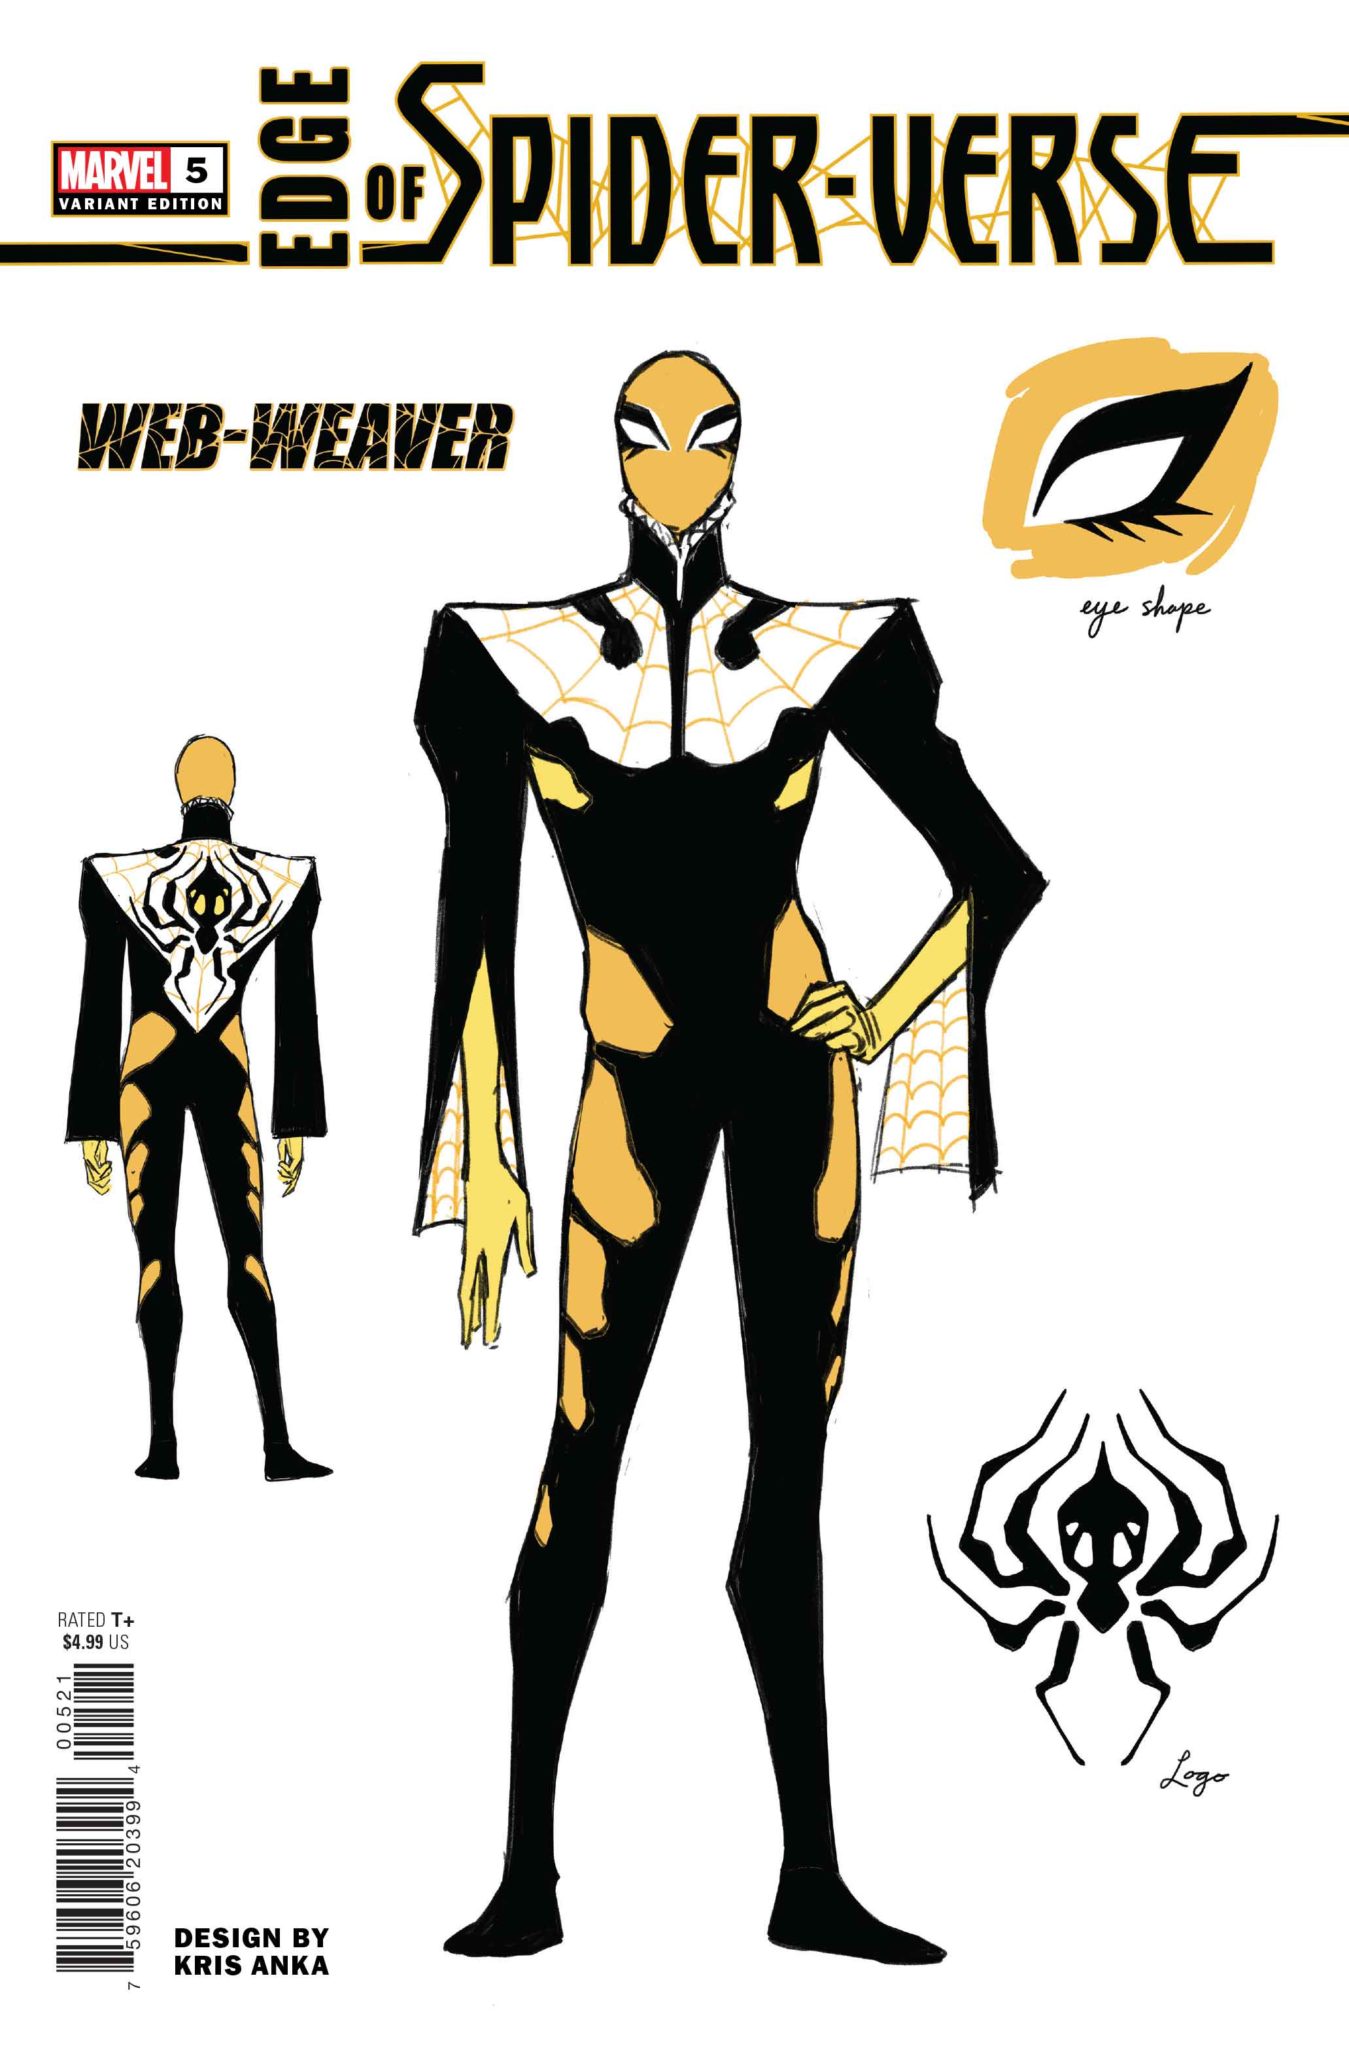 Edge of Spider-Verse #5 Web Weaver cover